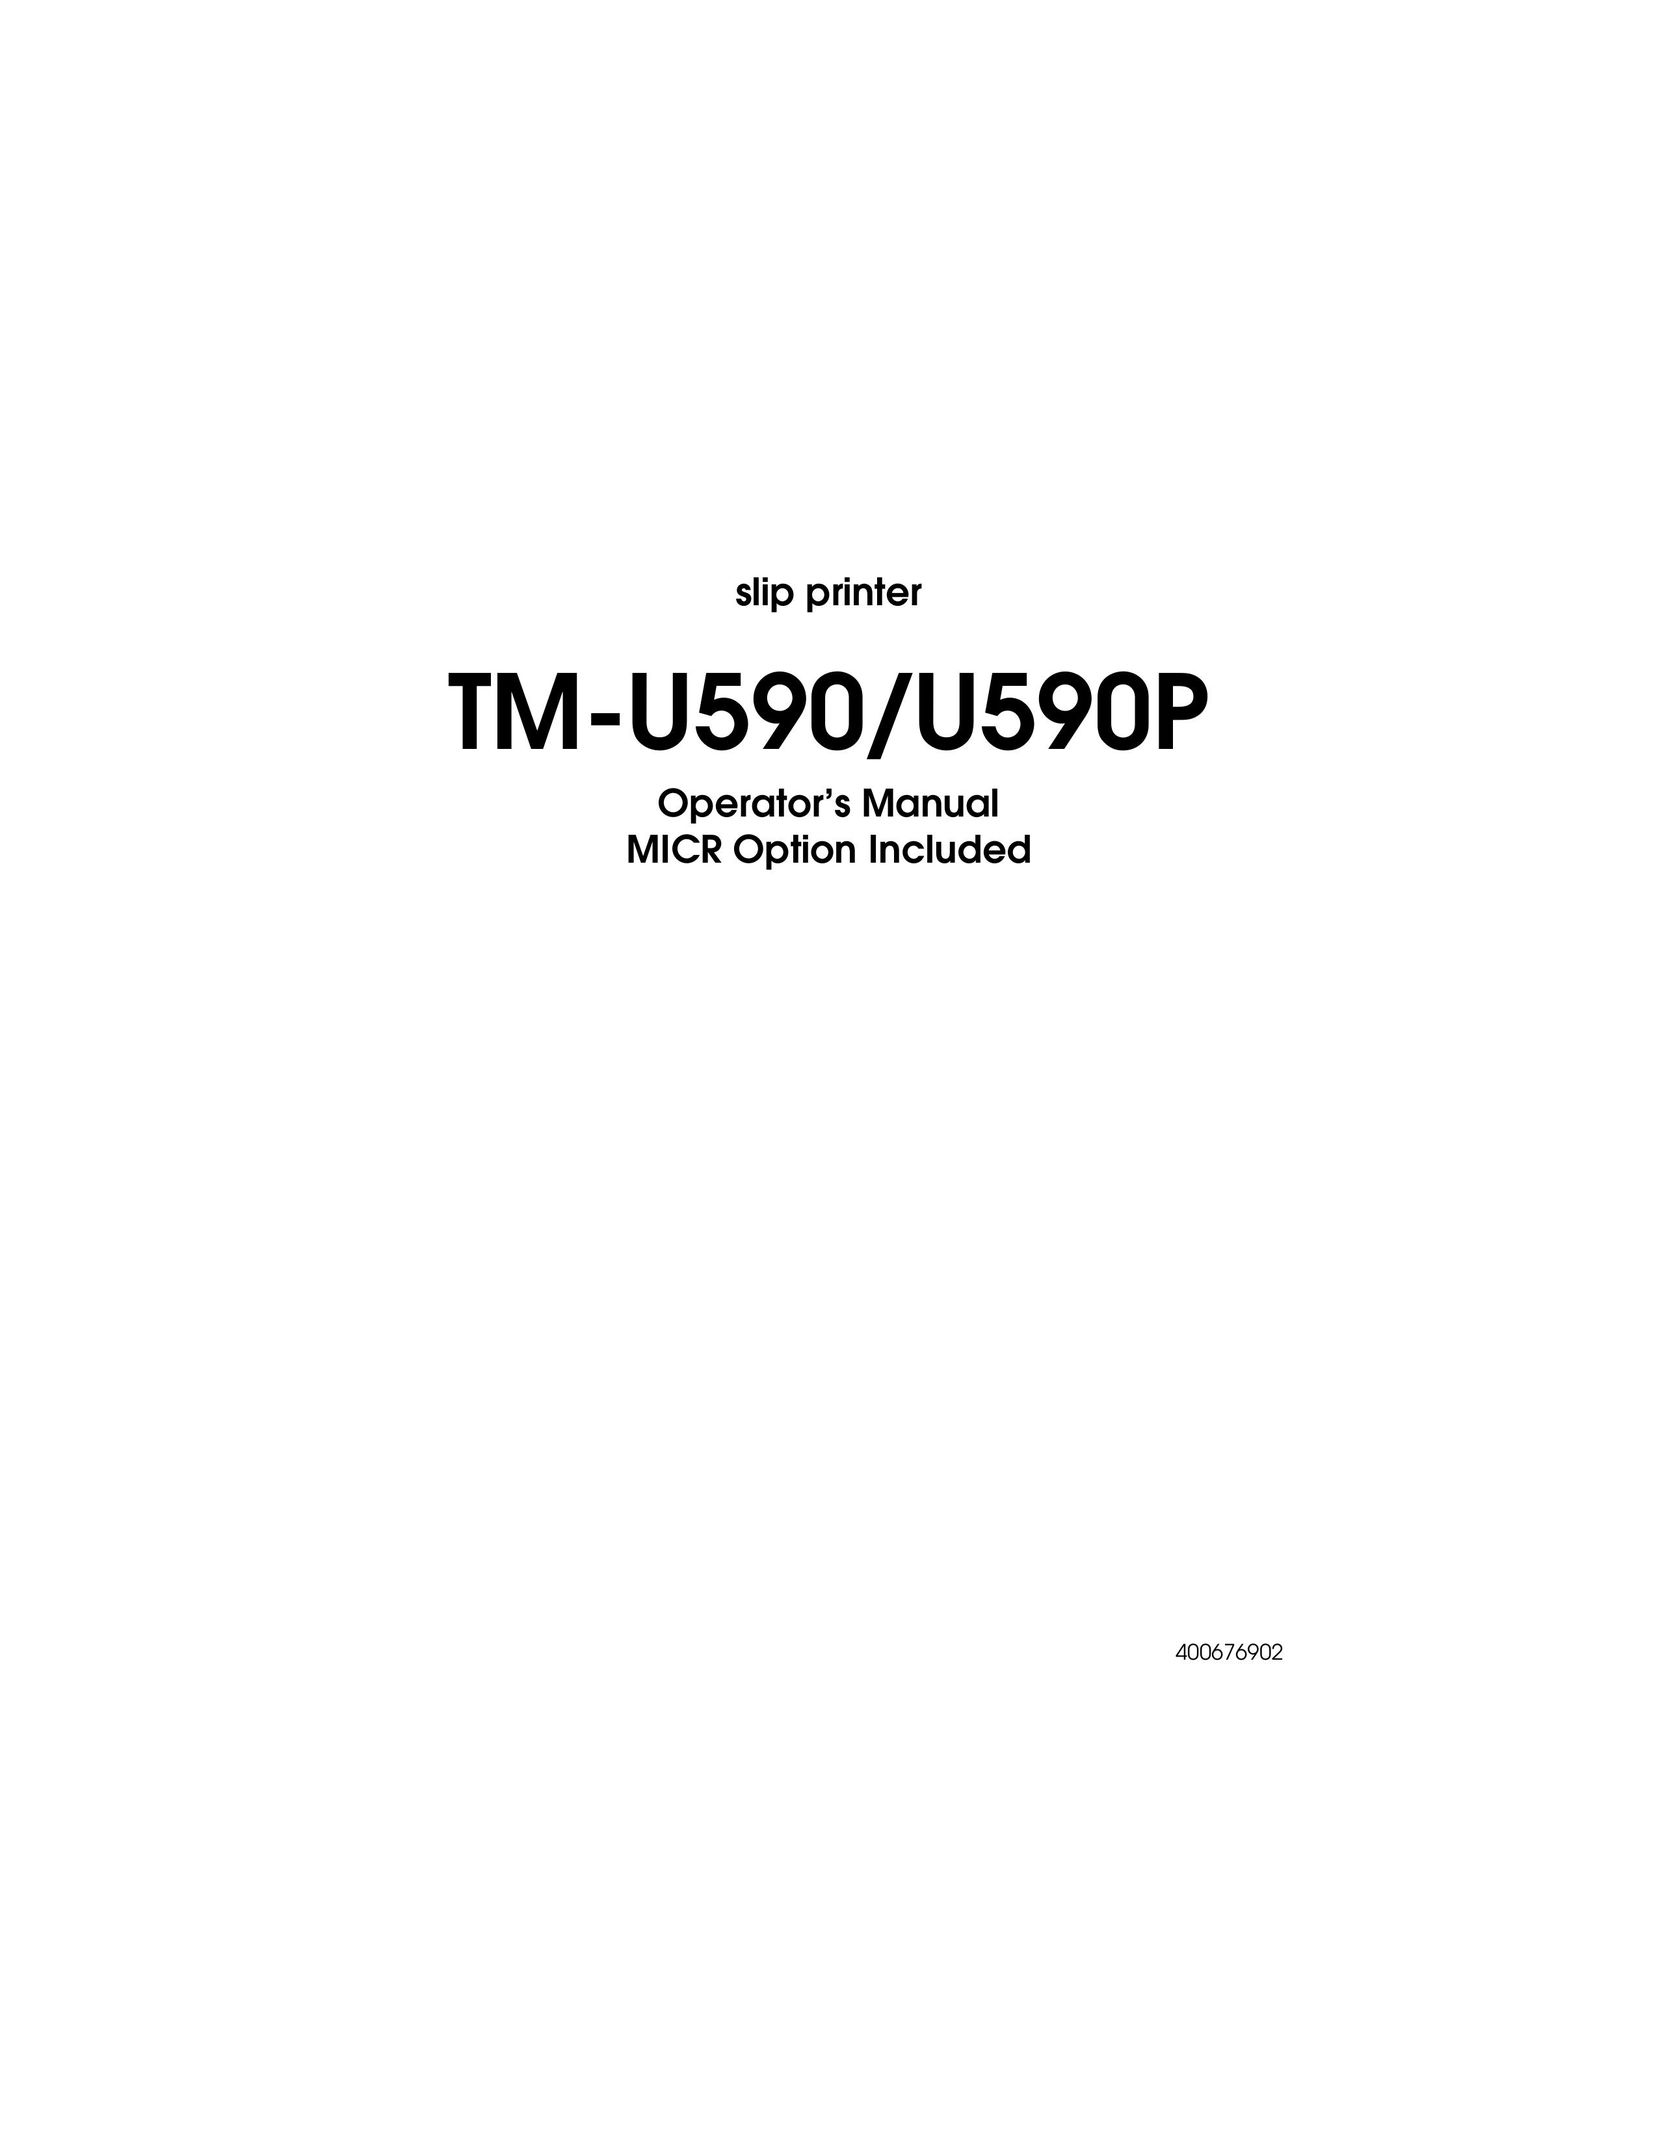 Seiko TM-U590/U590P Printer User Manual